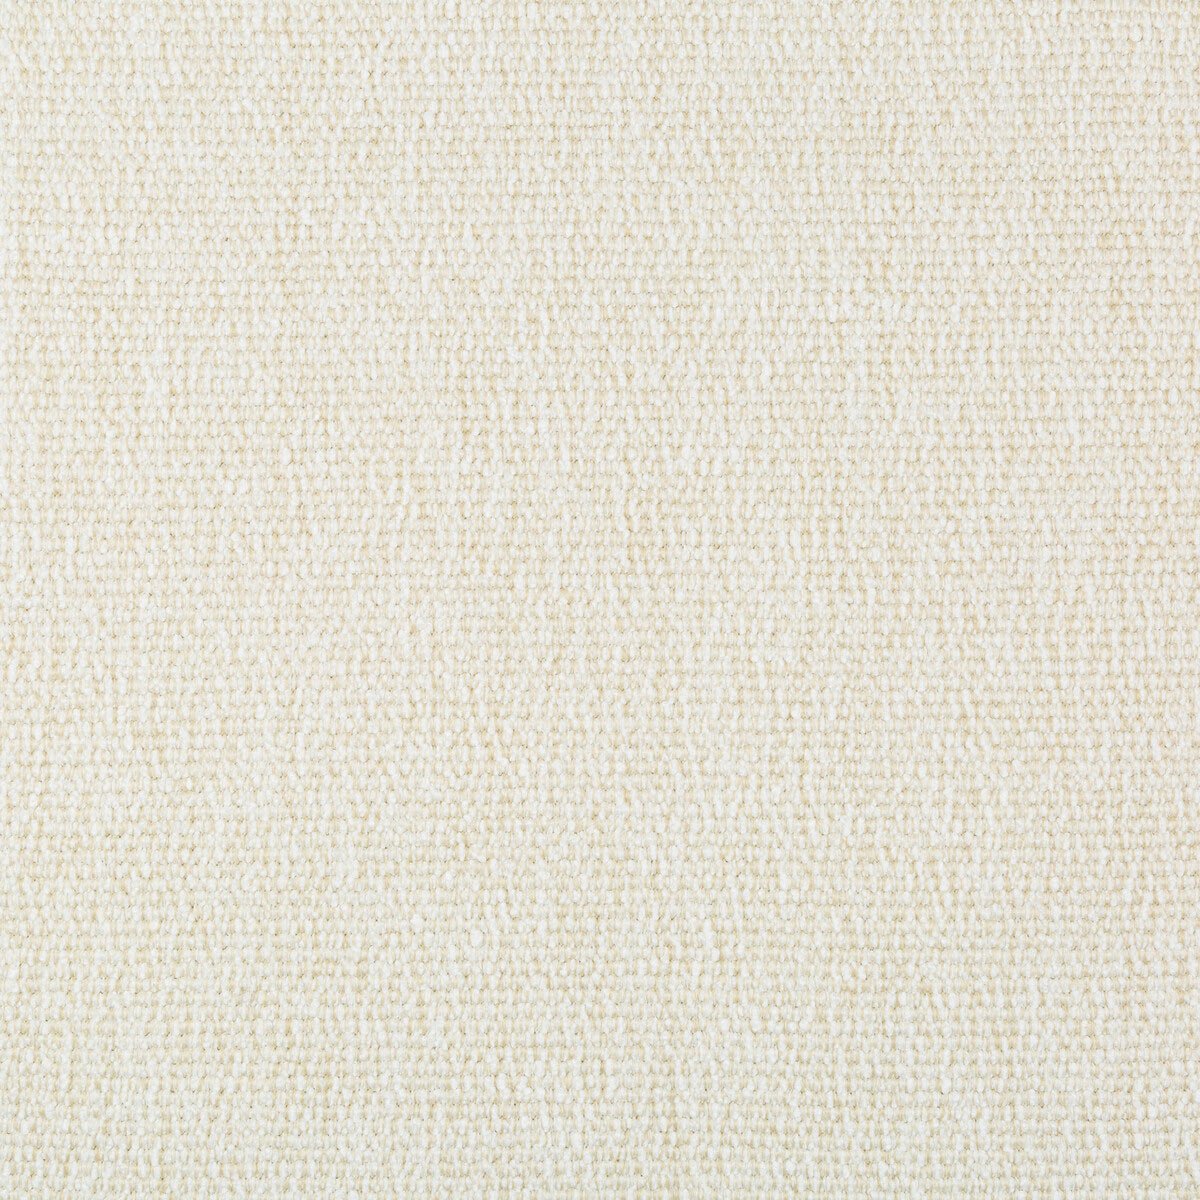 Kravet At The Helm White Sand Fabric | OnlineFabricStore